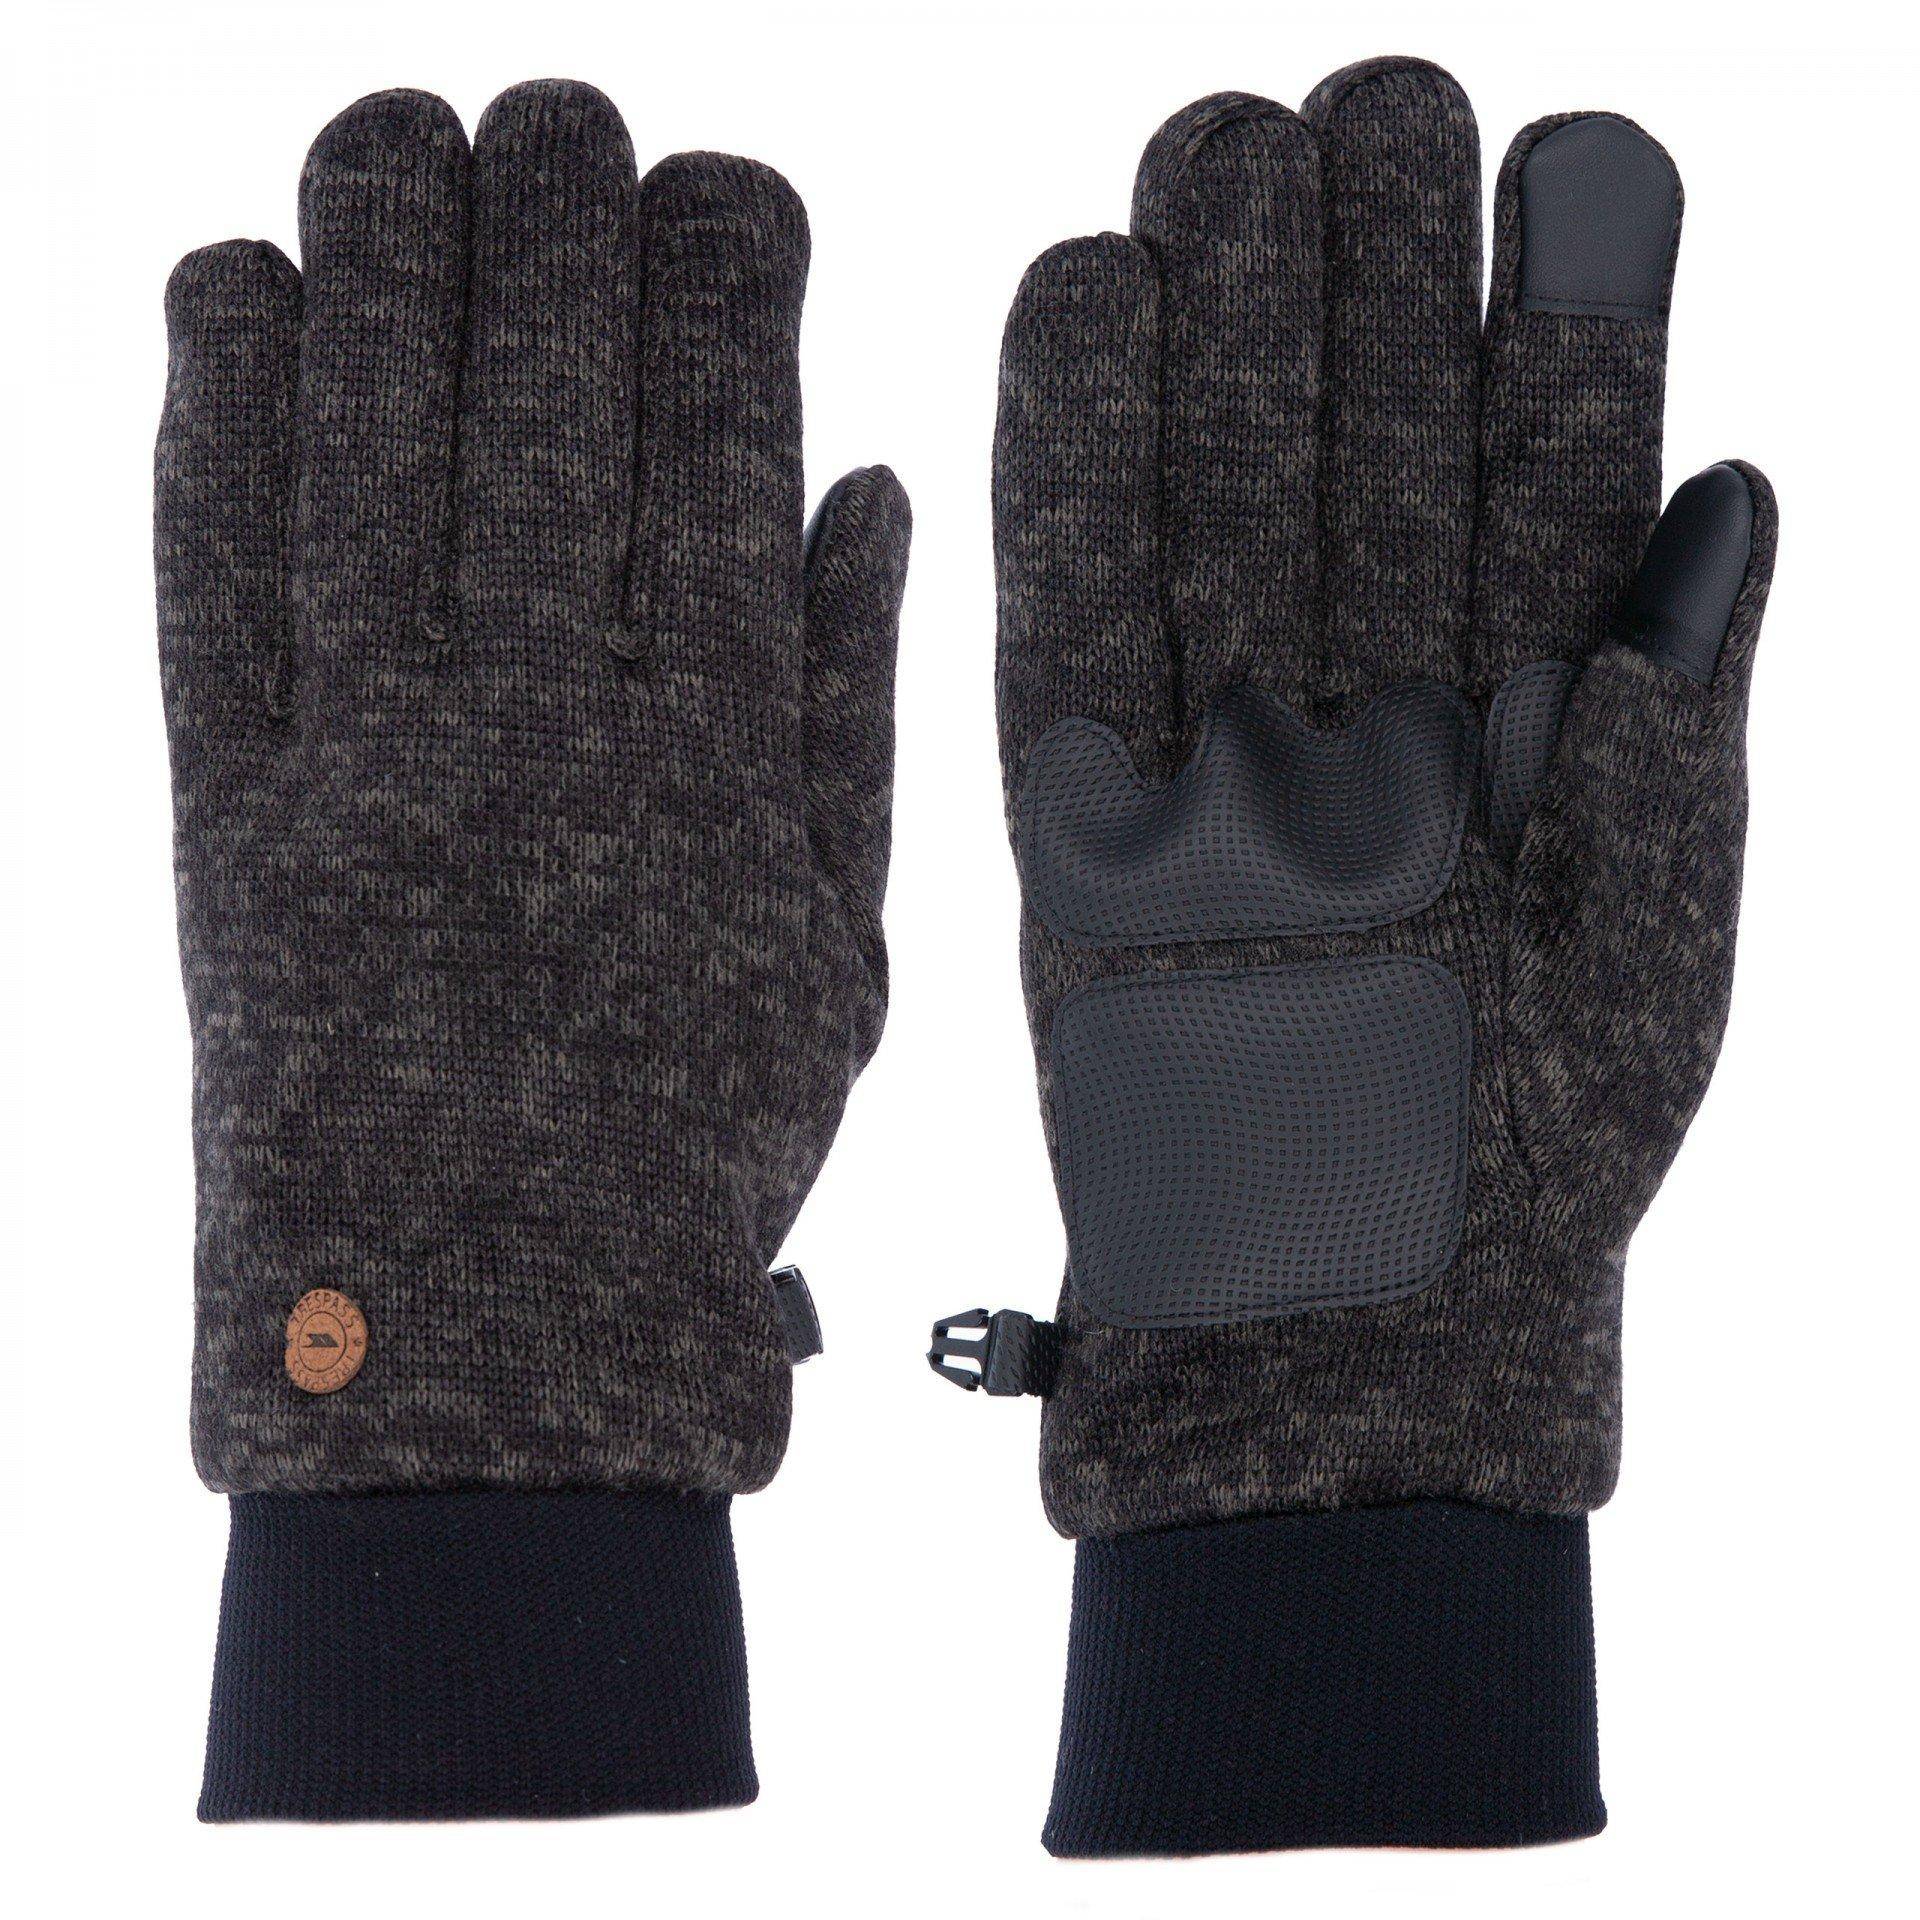 Tetra Handschuhe Herren Grau XL von Trespass